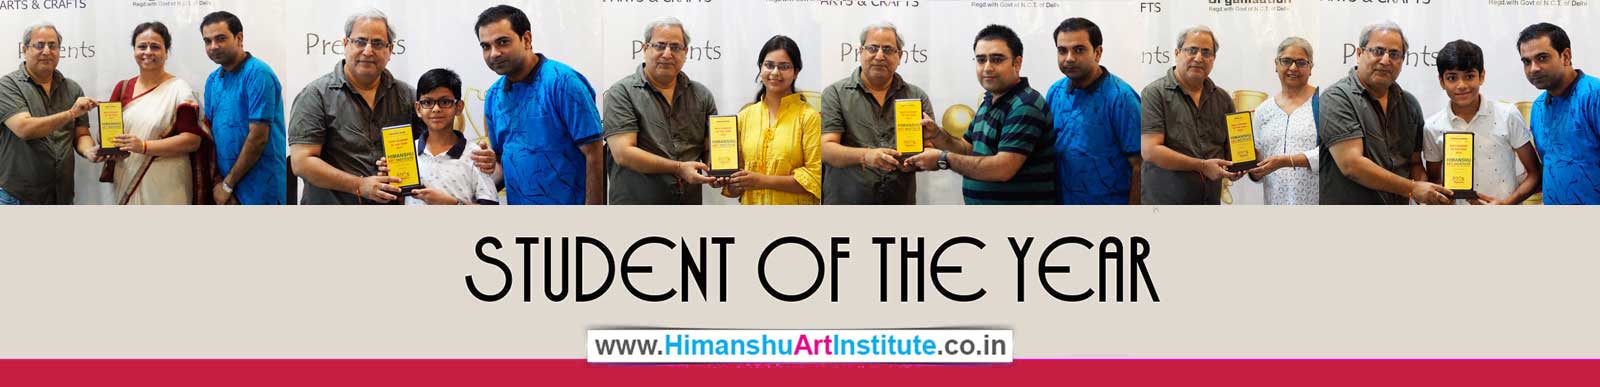 Sakshi Rajpal, Utkarsh Khanna, and Upma Lal Awarded Student of the Year 2016